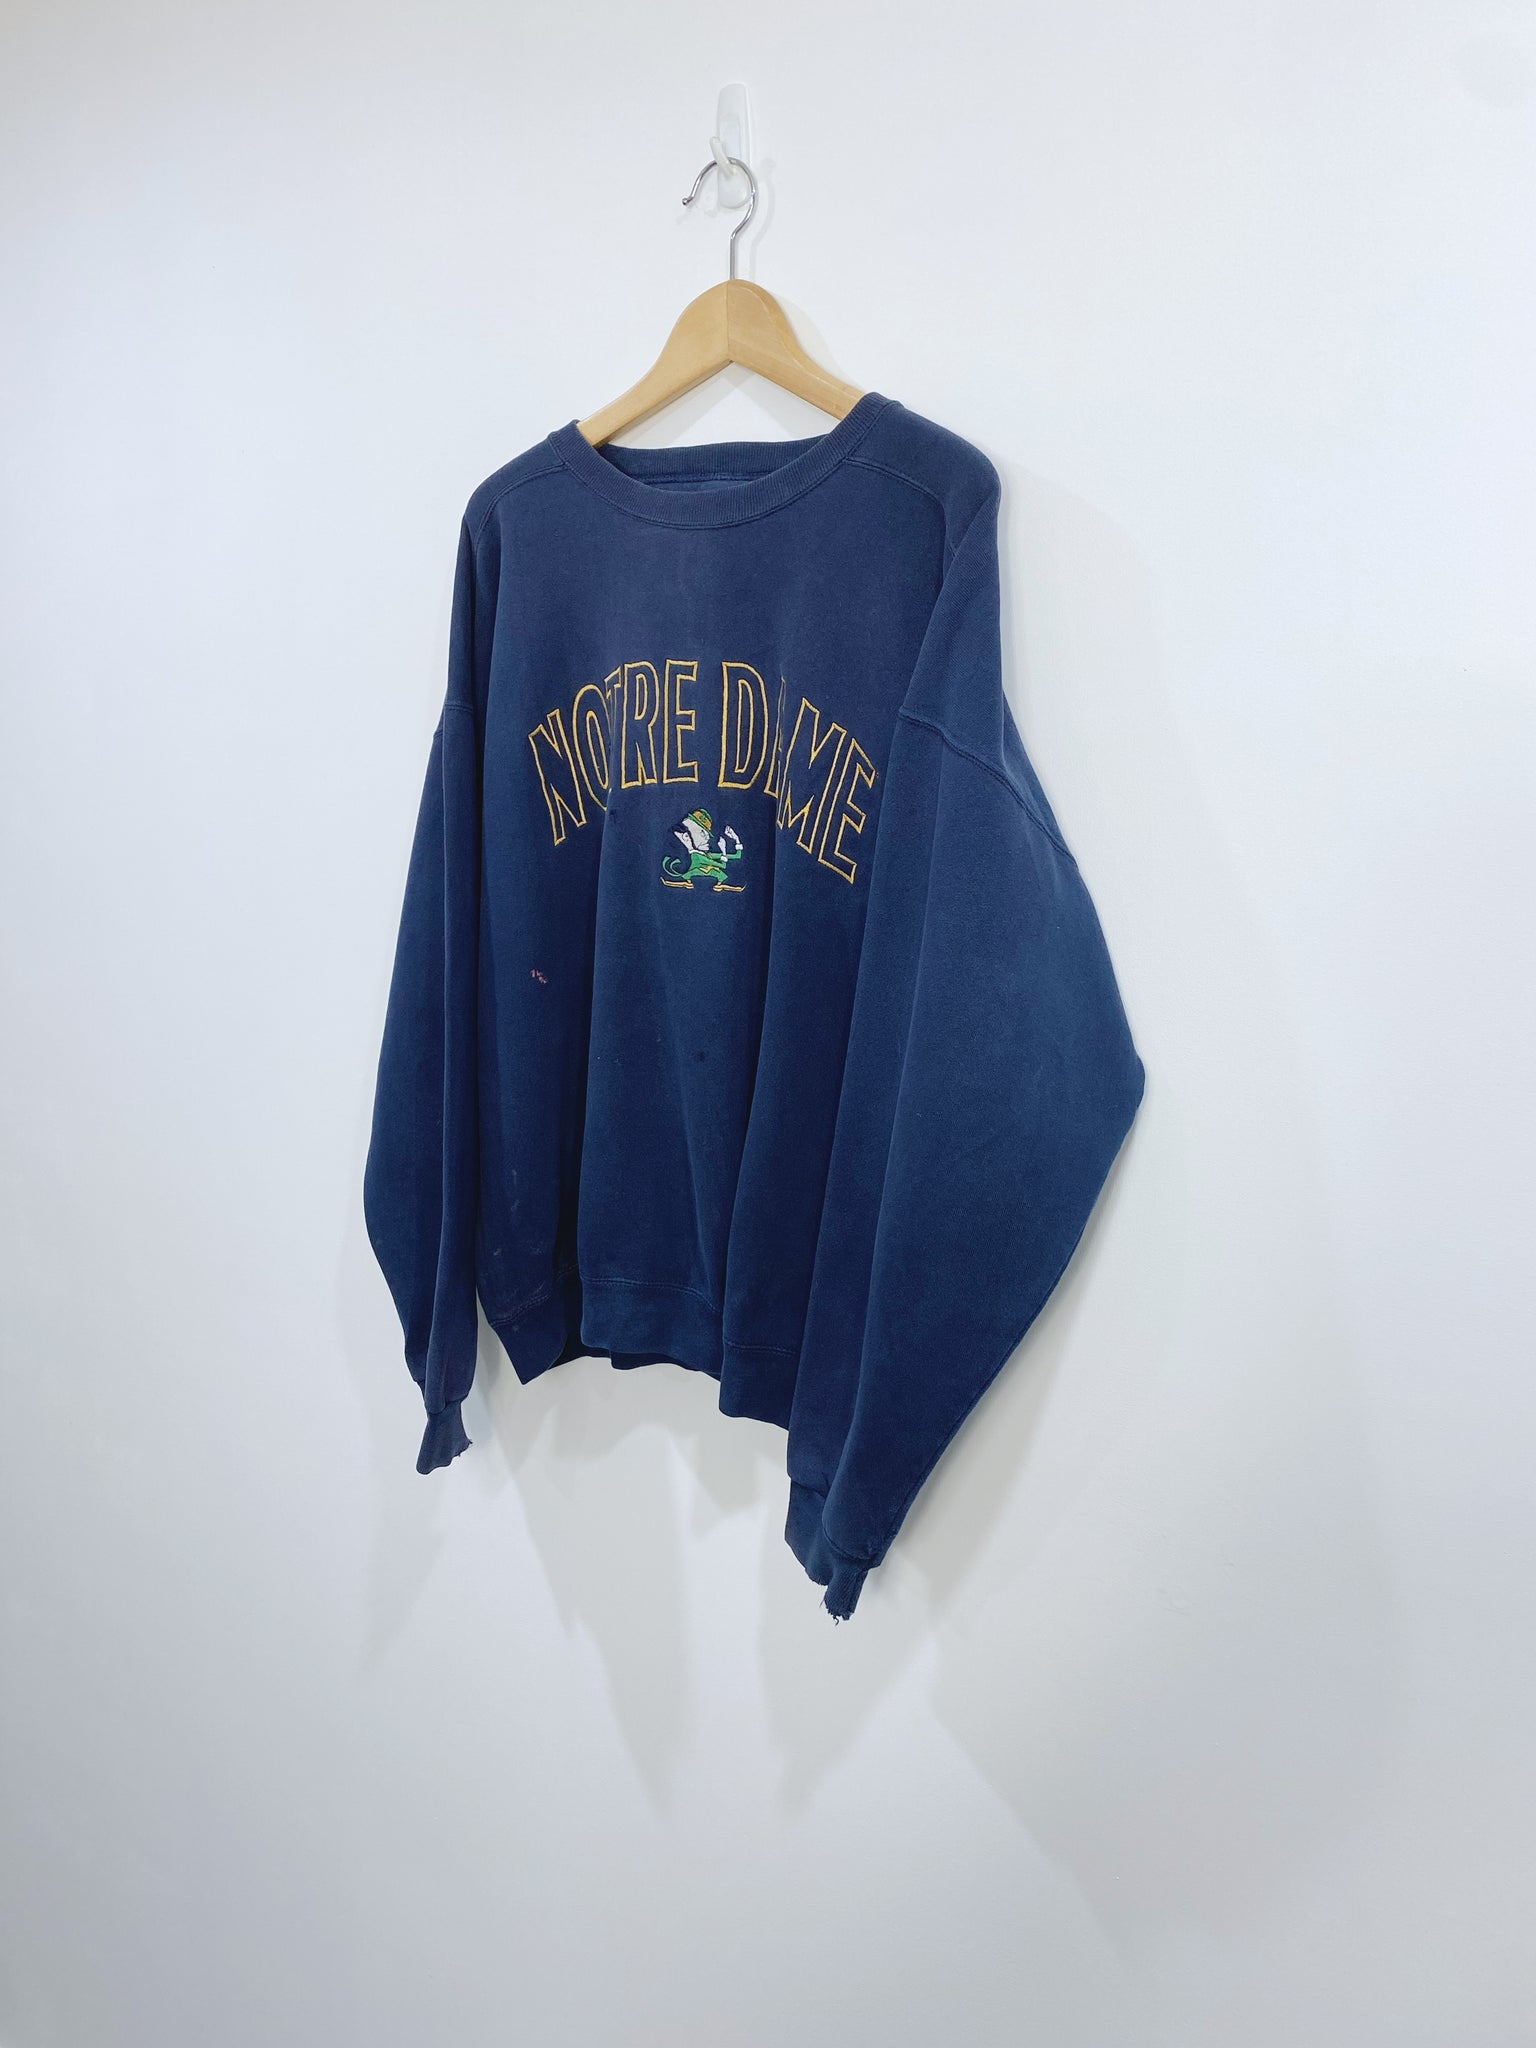 Vintage 90s Notre Dame Embroidered Sweatshirt L